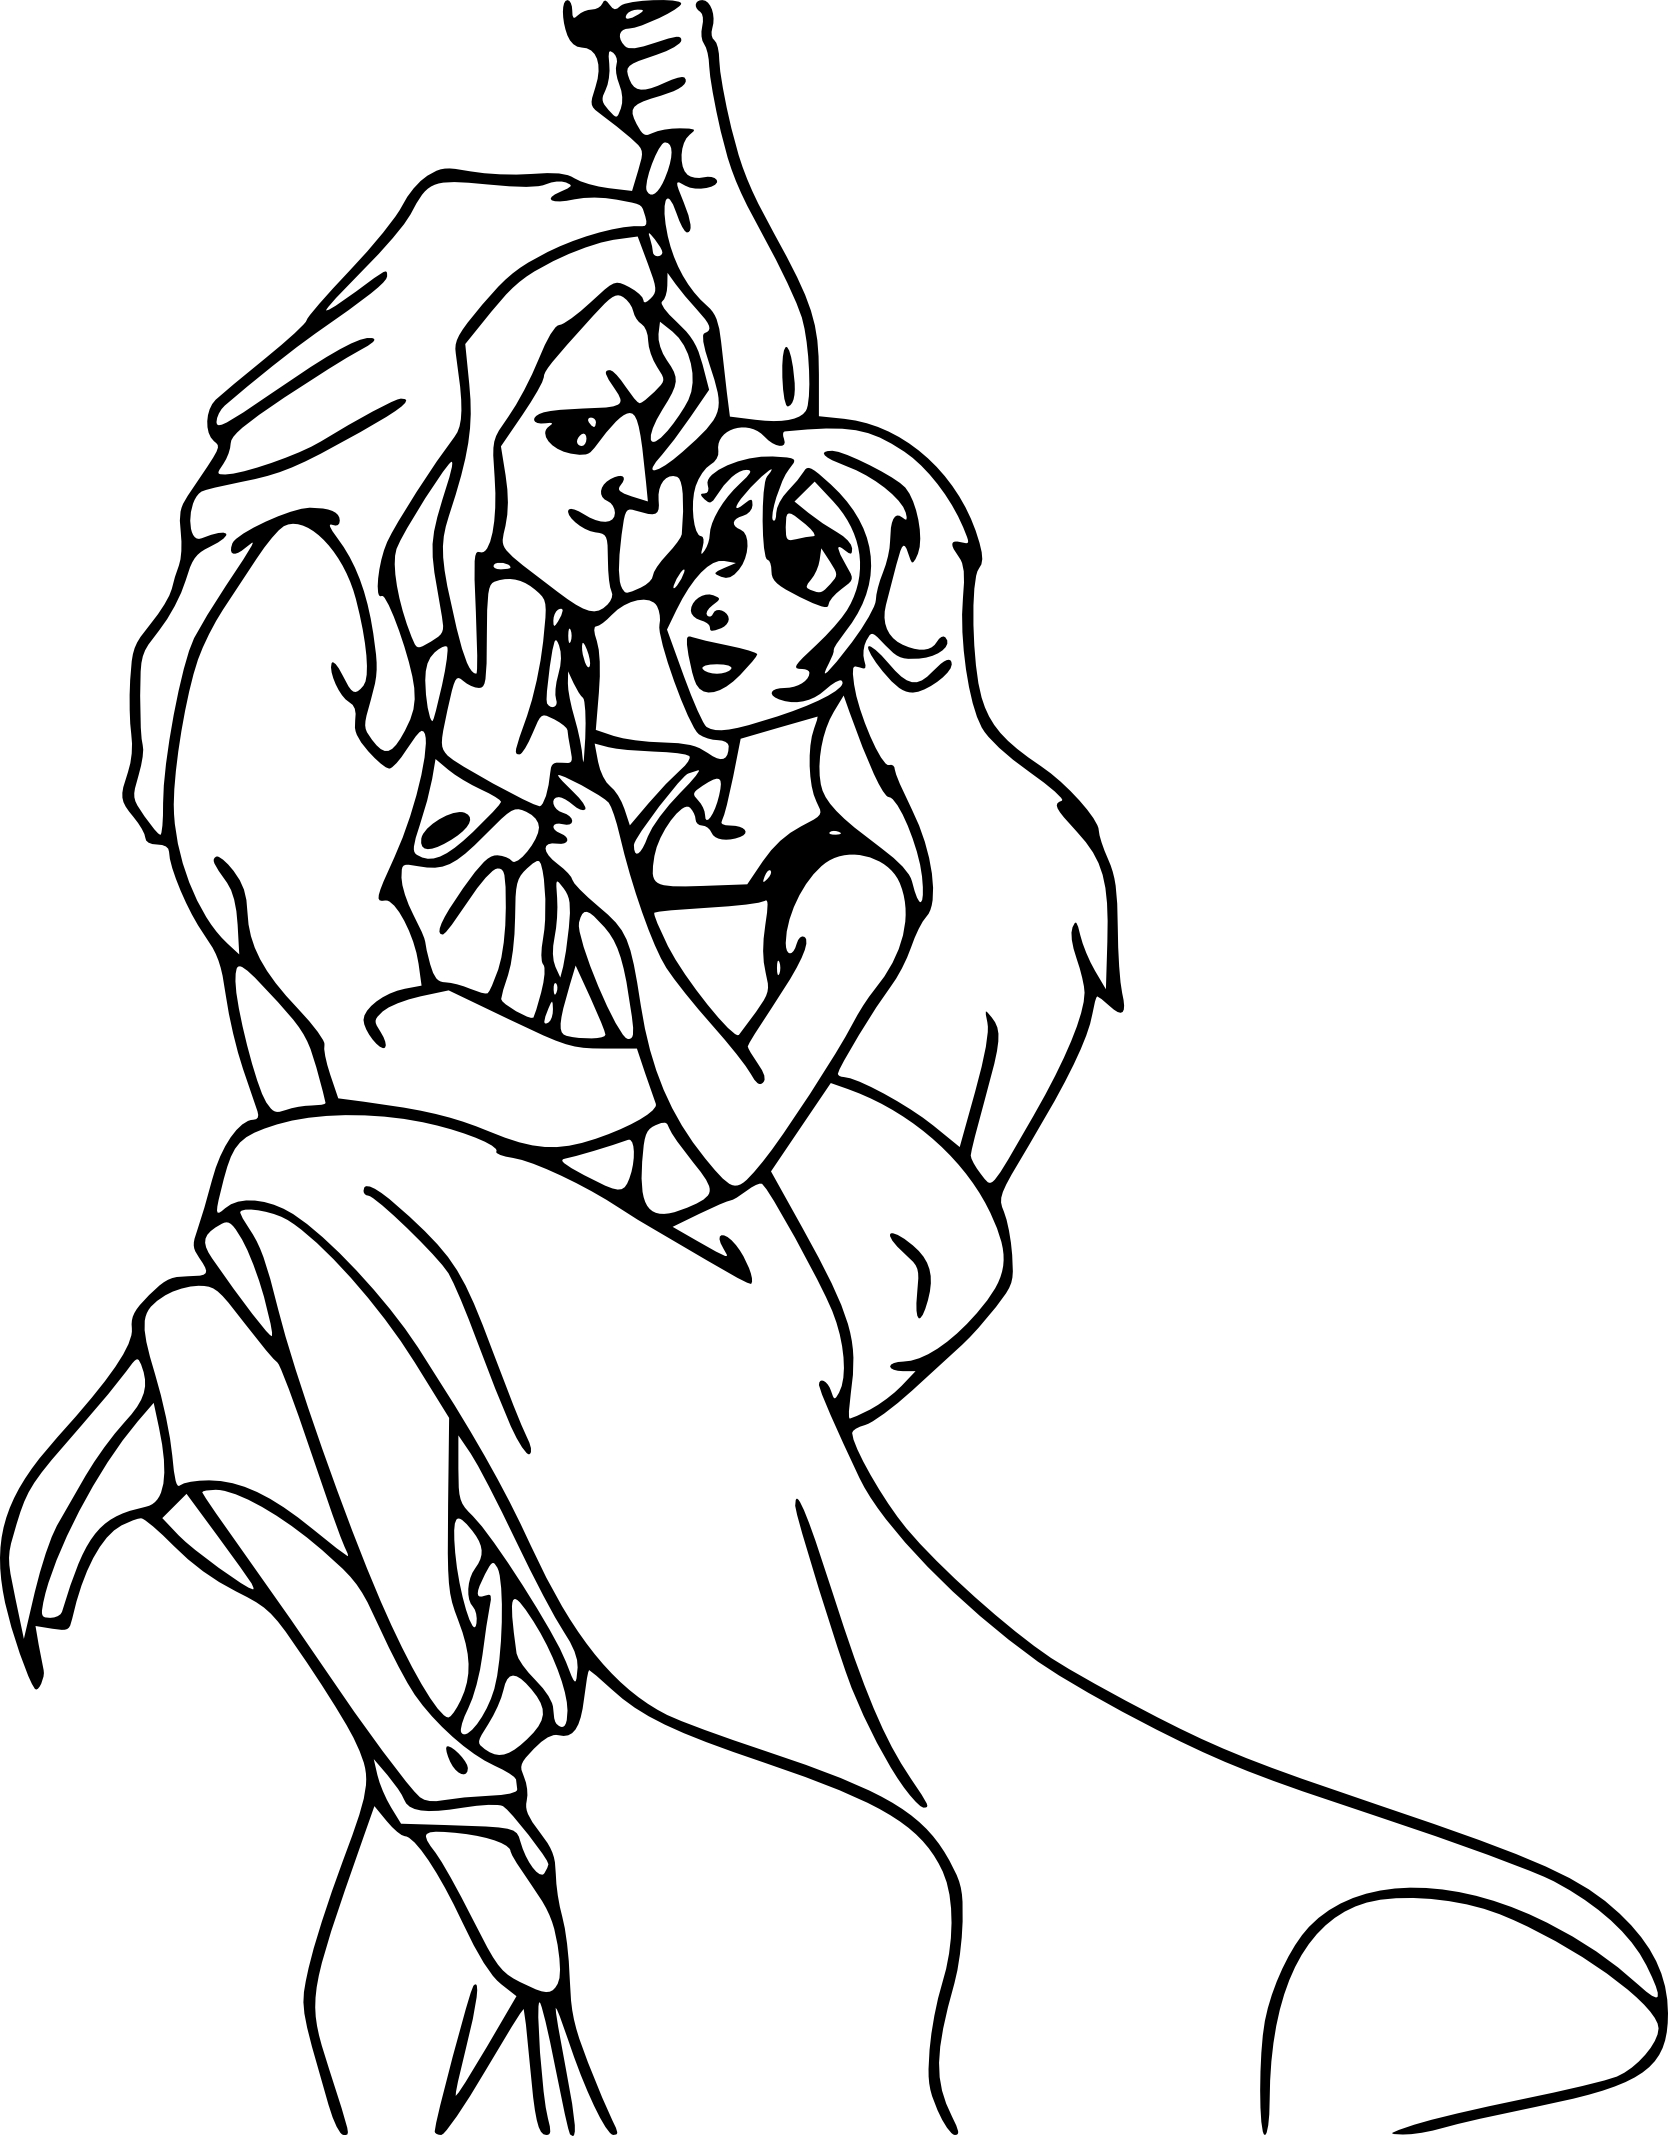 Jane And Tarzan coloring page